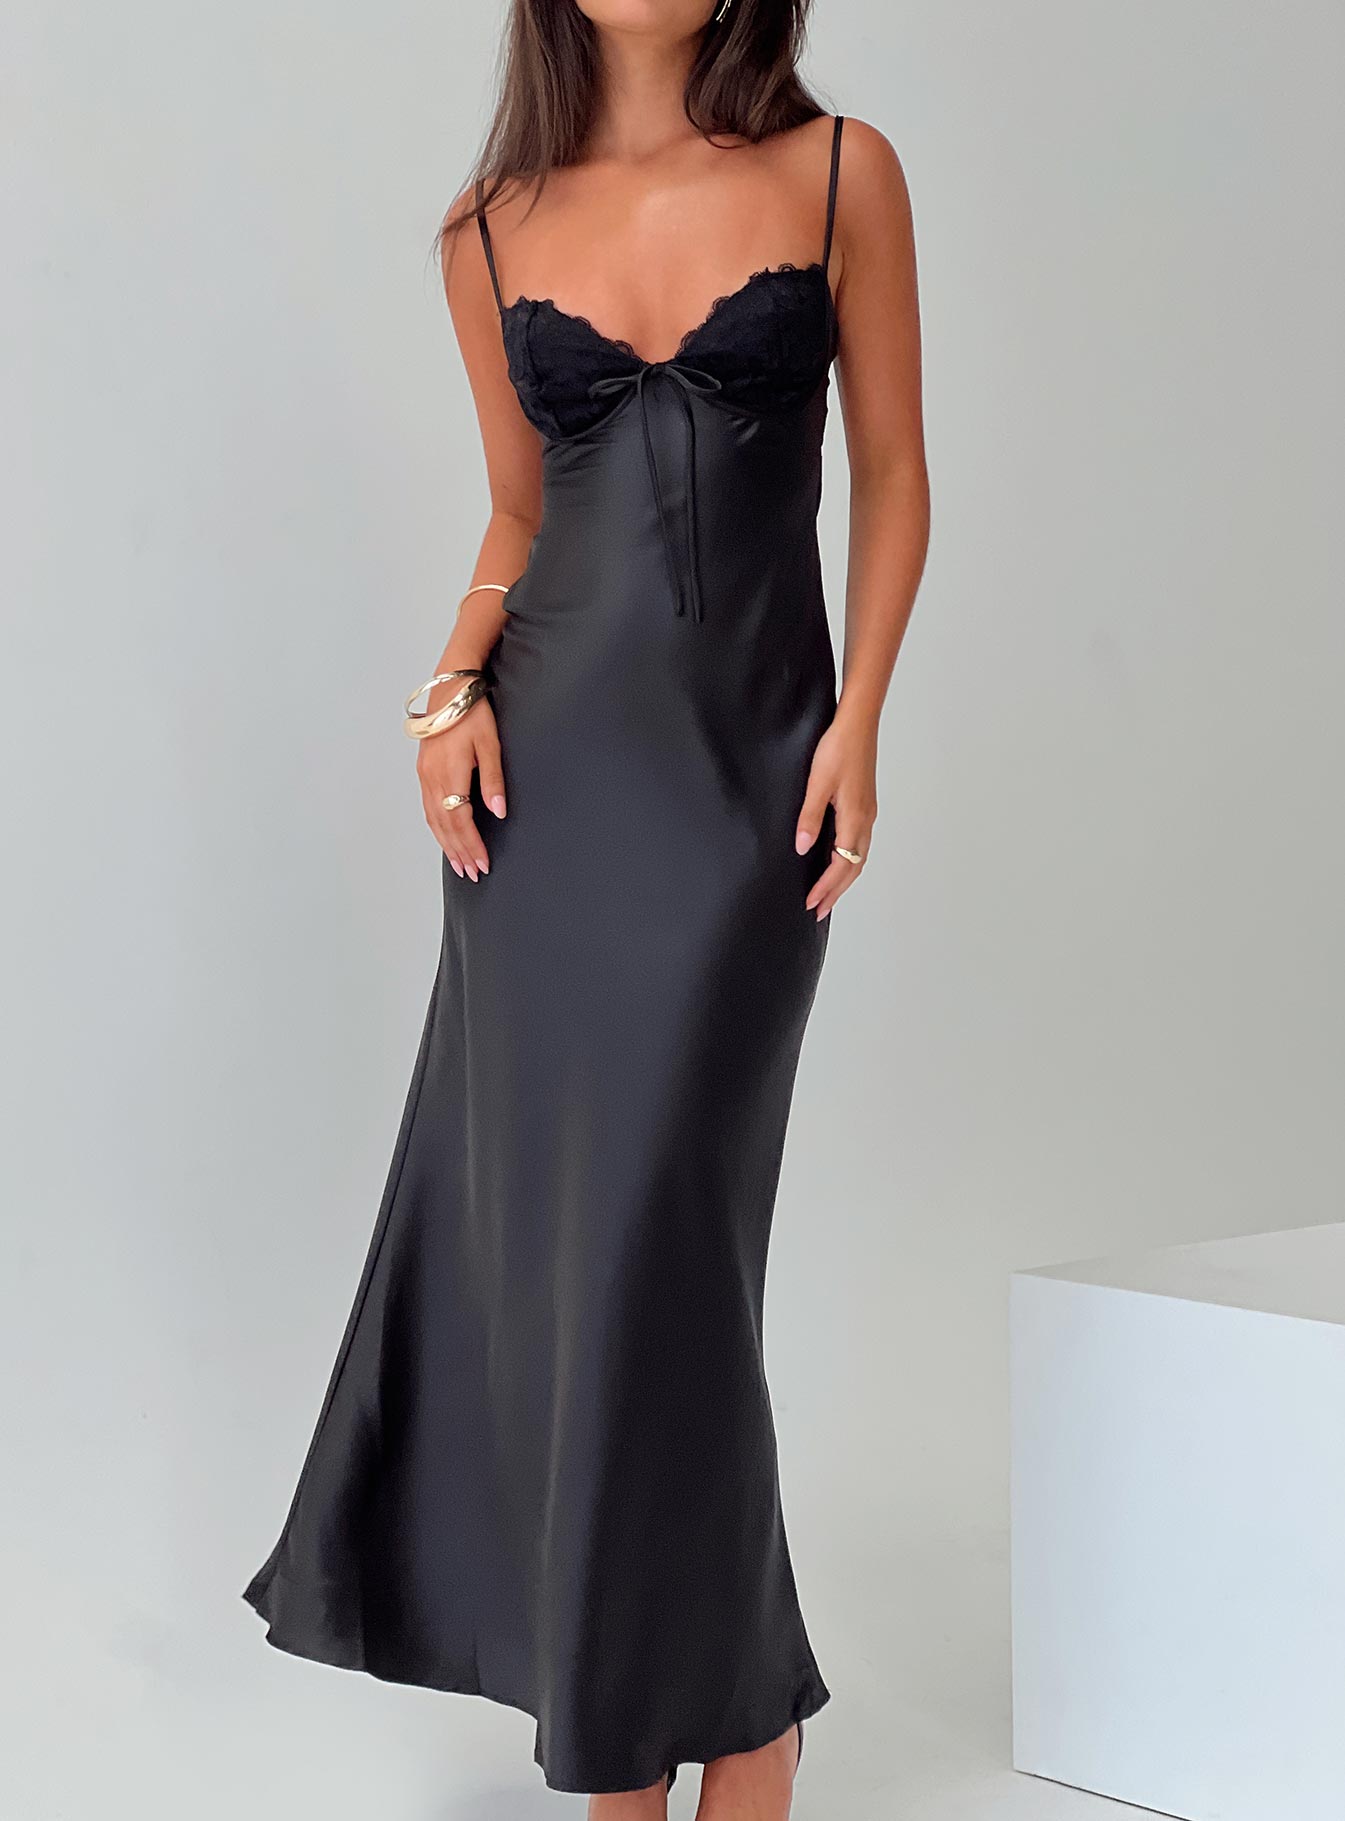 Shop Formal Dress - Fadyen Bias Cut Maxi Dress Black fifth image